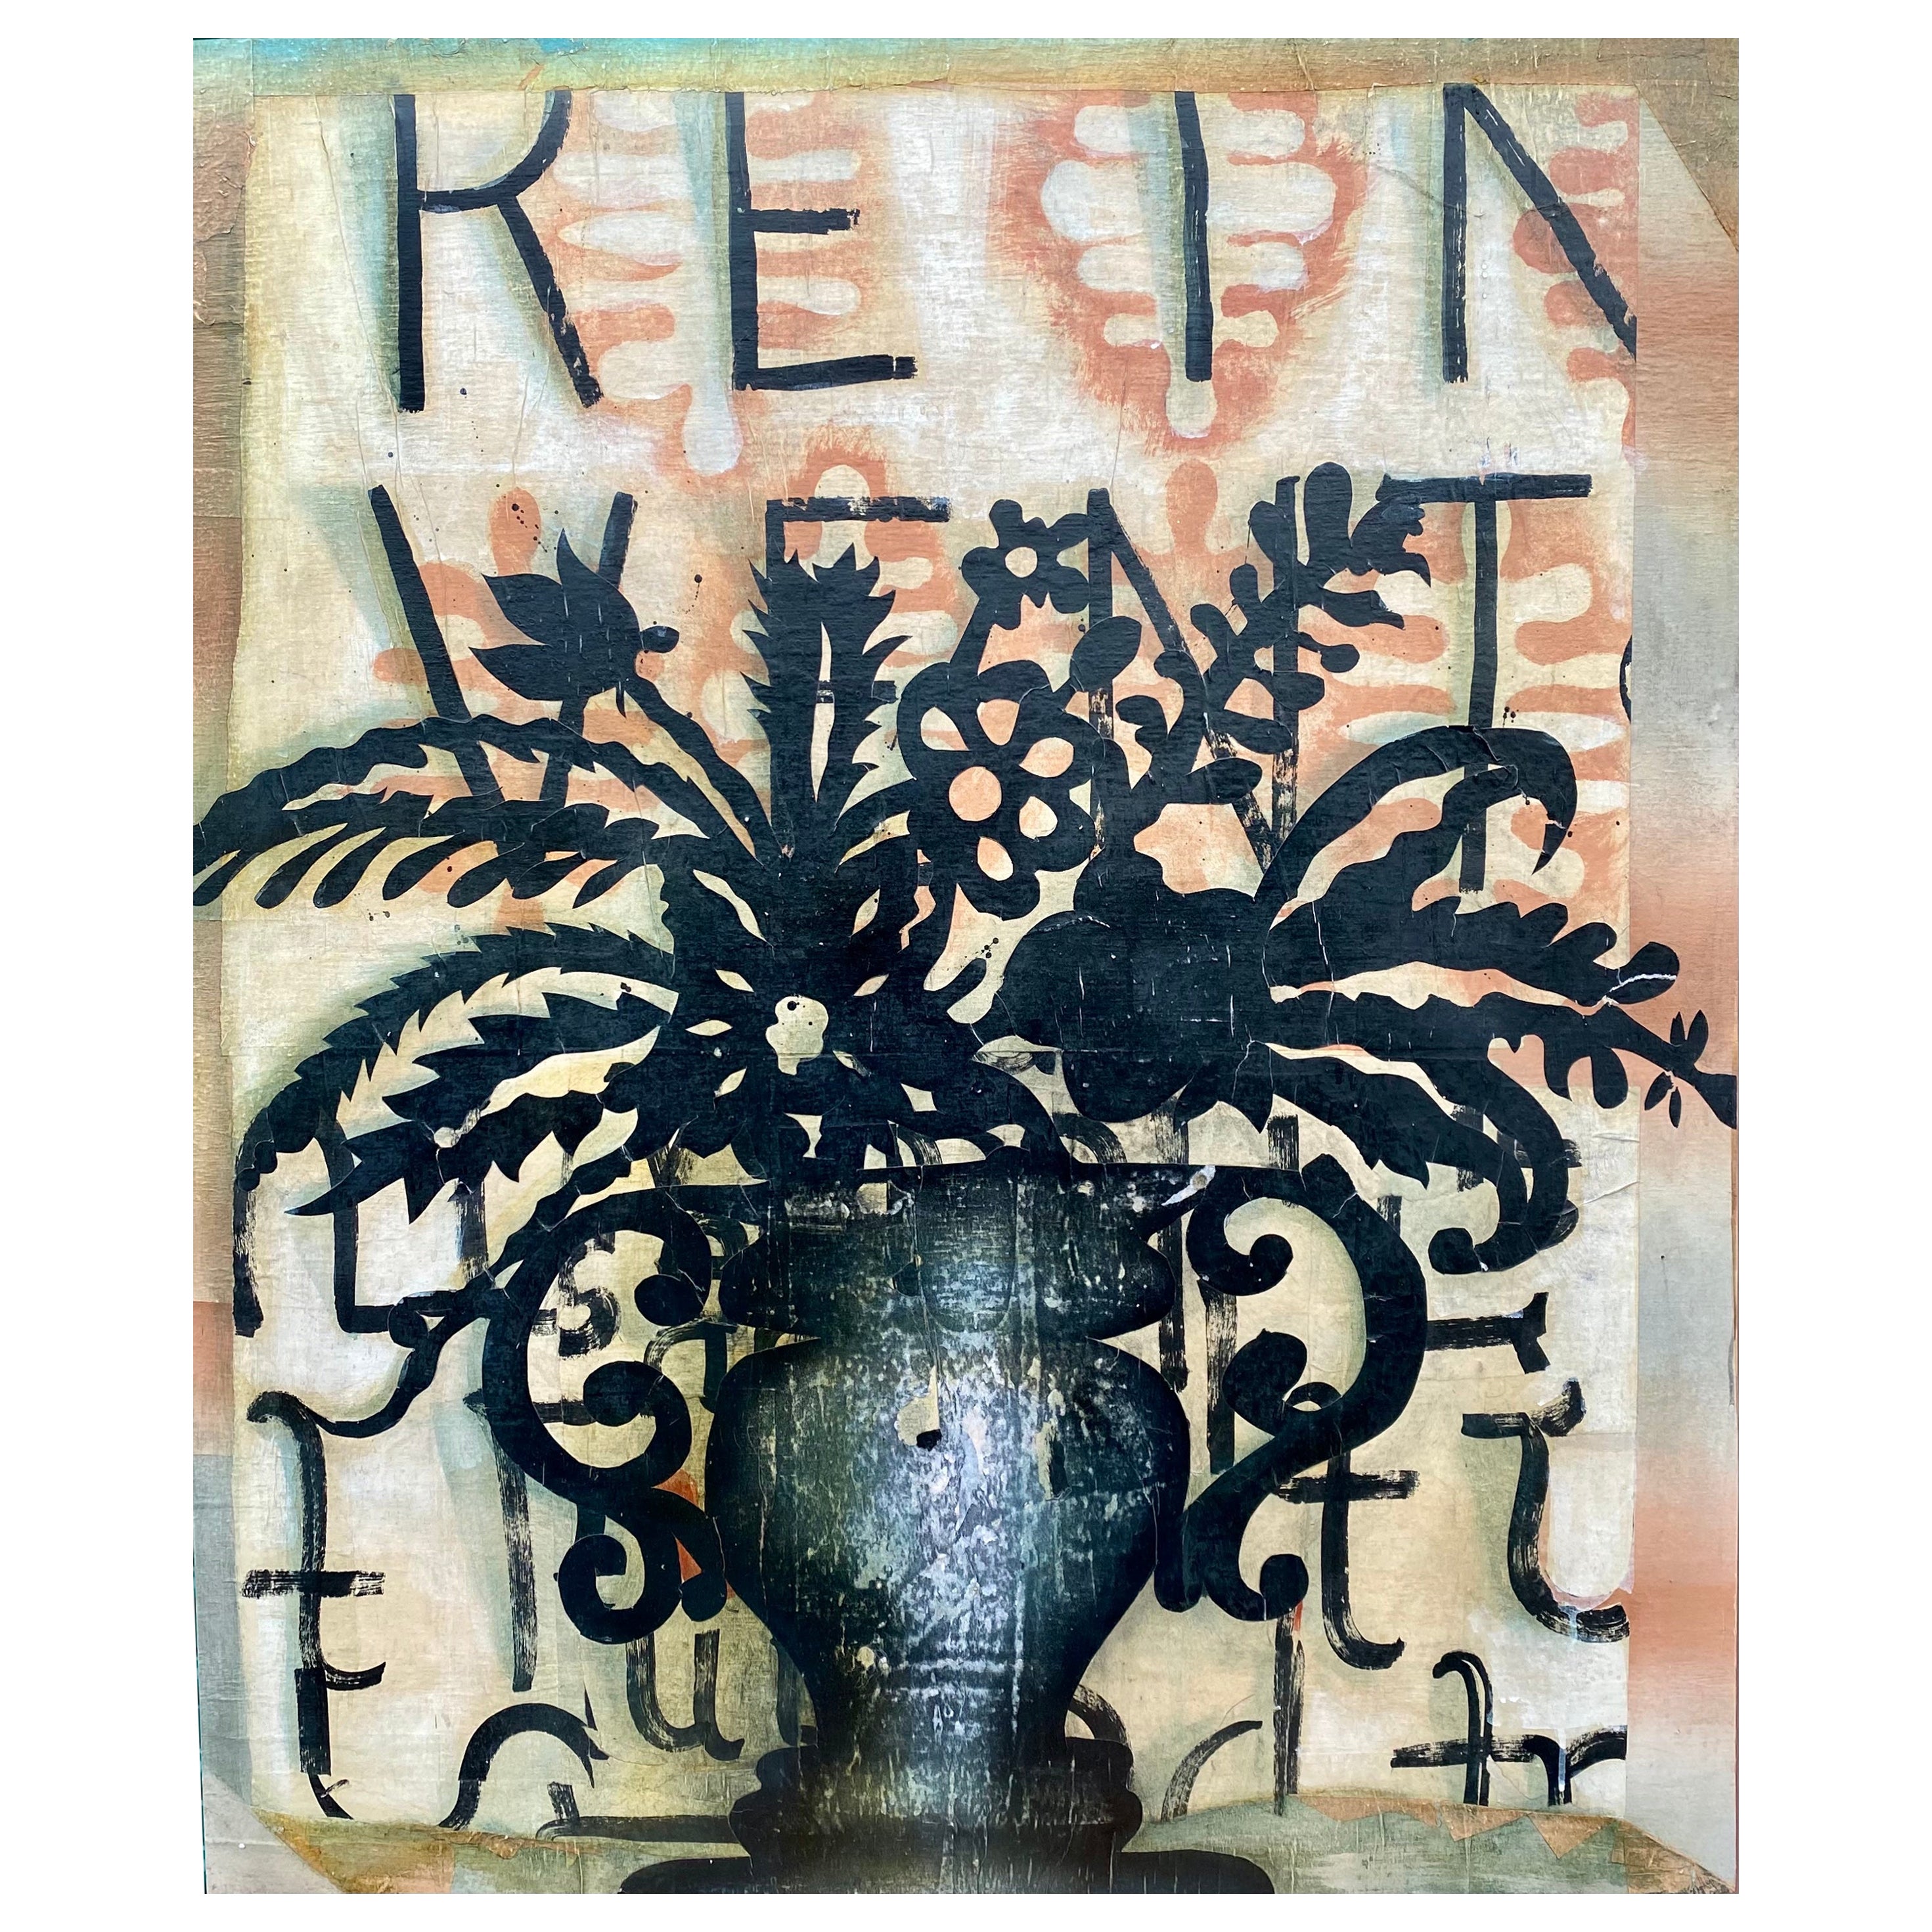 "Reinvent - Unurned Fruit" by Kevin Paulsen For Sale